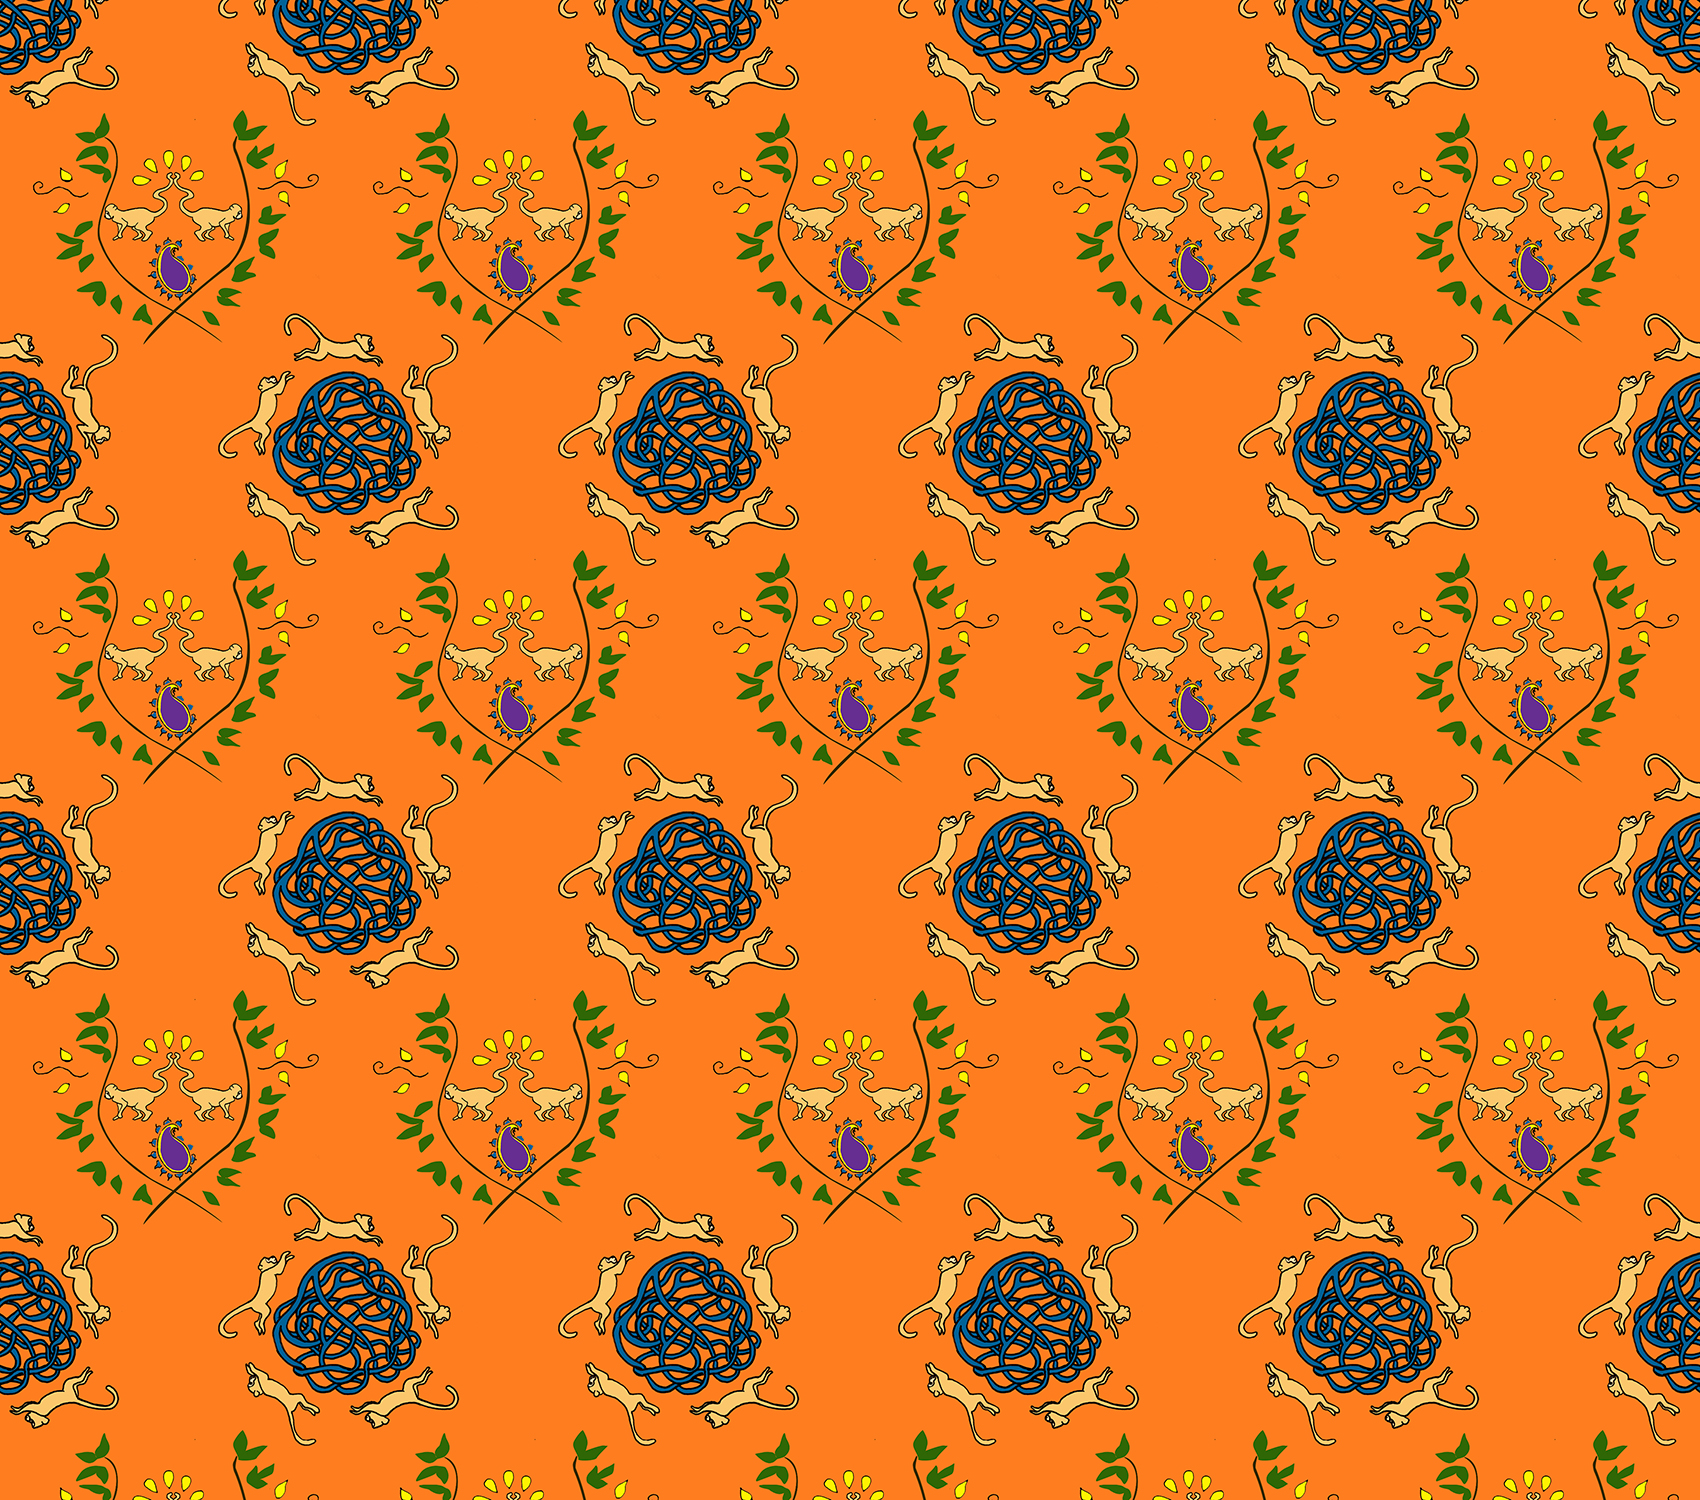 monkey pattern orange.jpg